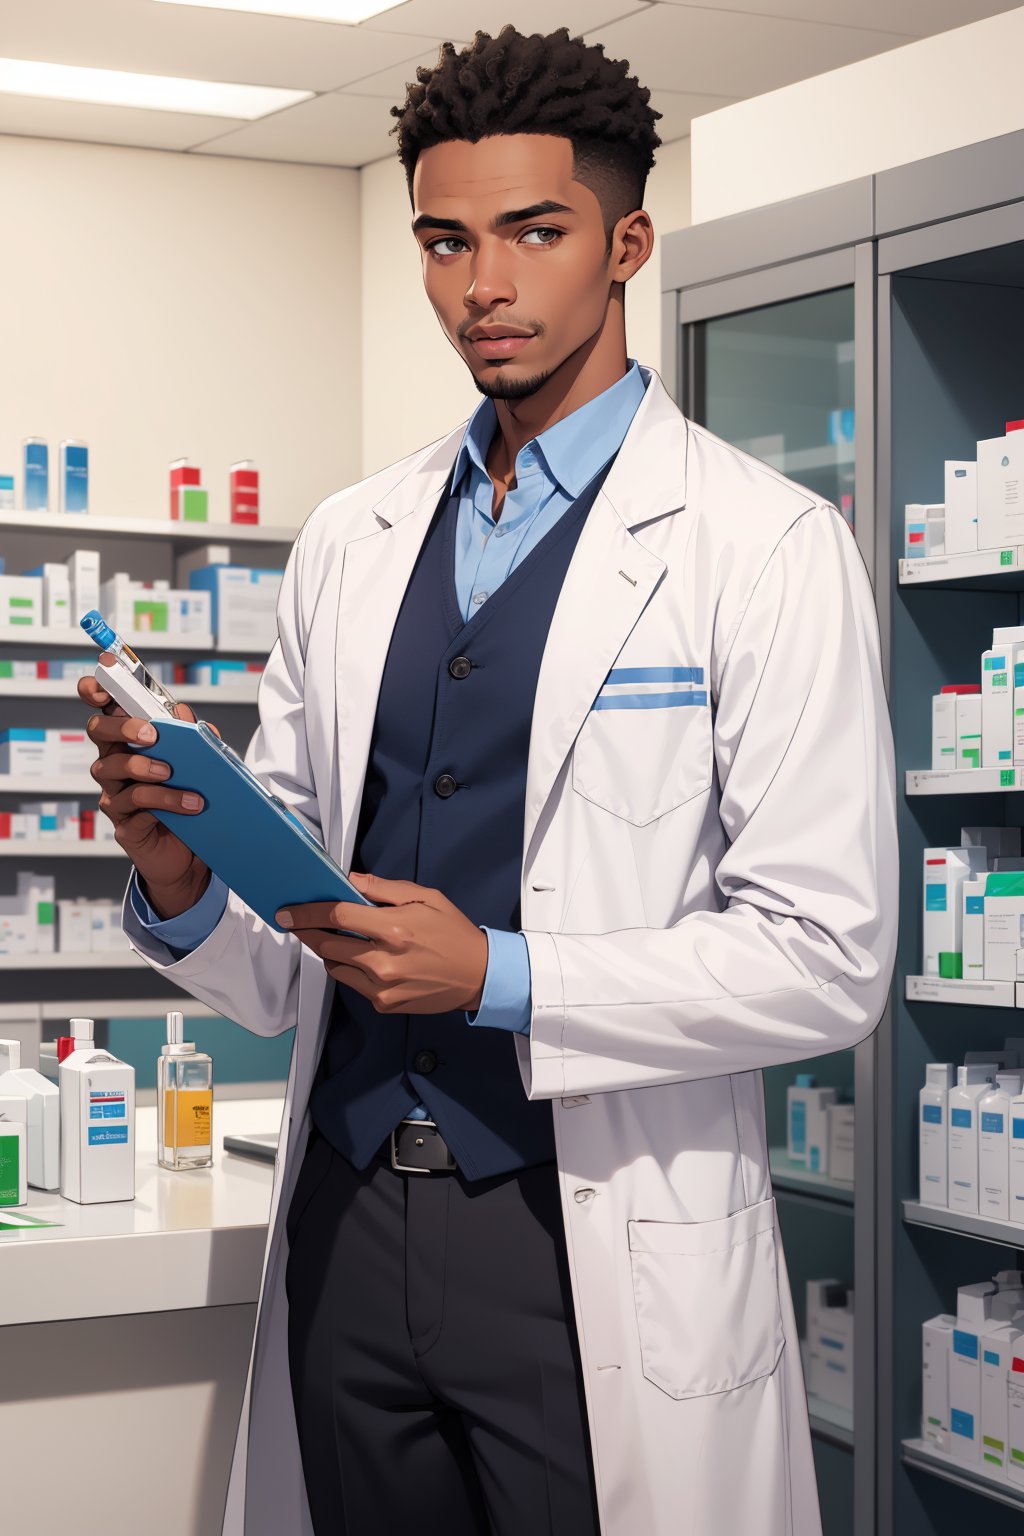 modern pharmacy, angolan man pharmacist white lab coat, bright